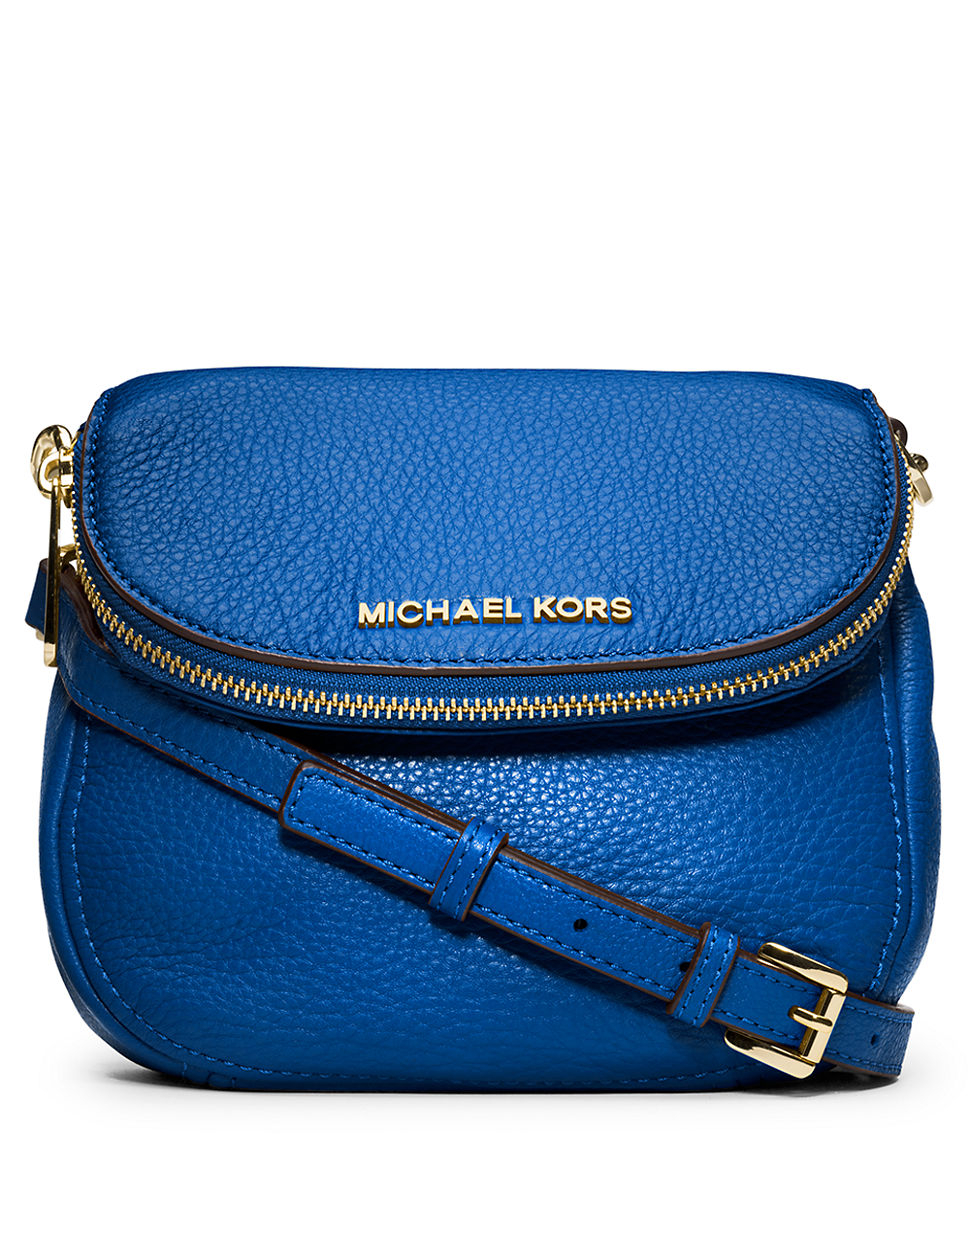 MICHAEL Michael Kors Bedford Leather Flap Crossbody Bag in Blue - Lyst